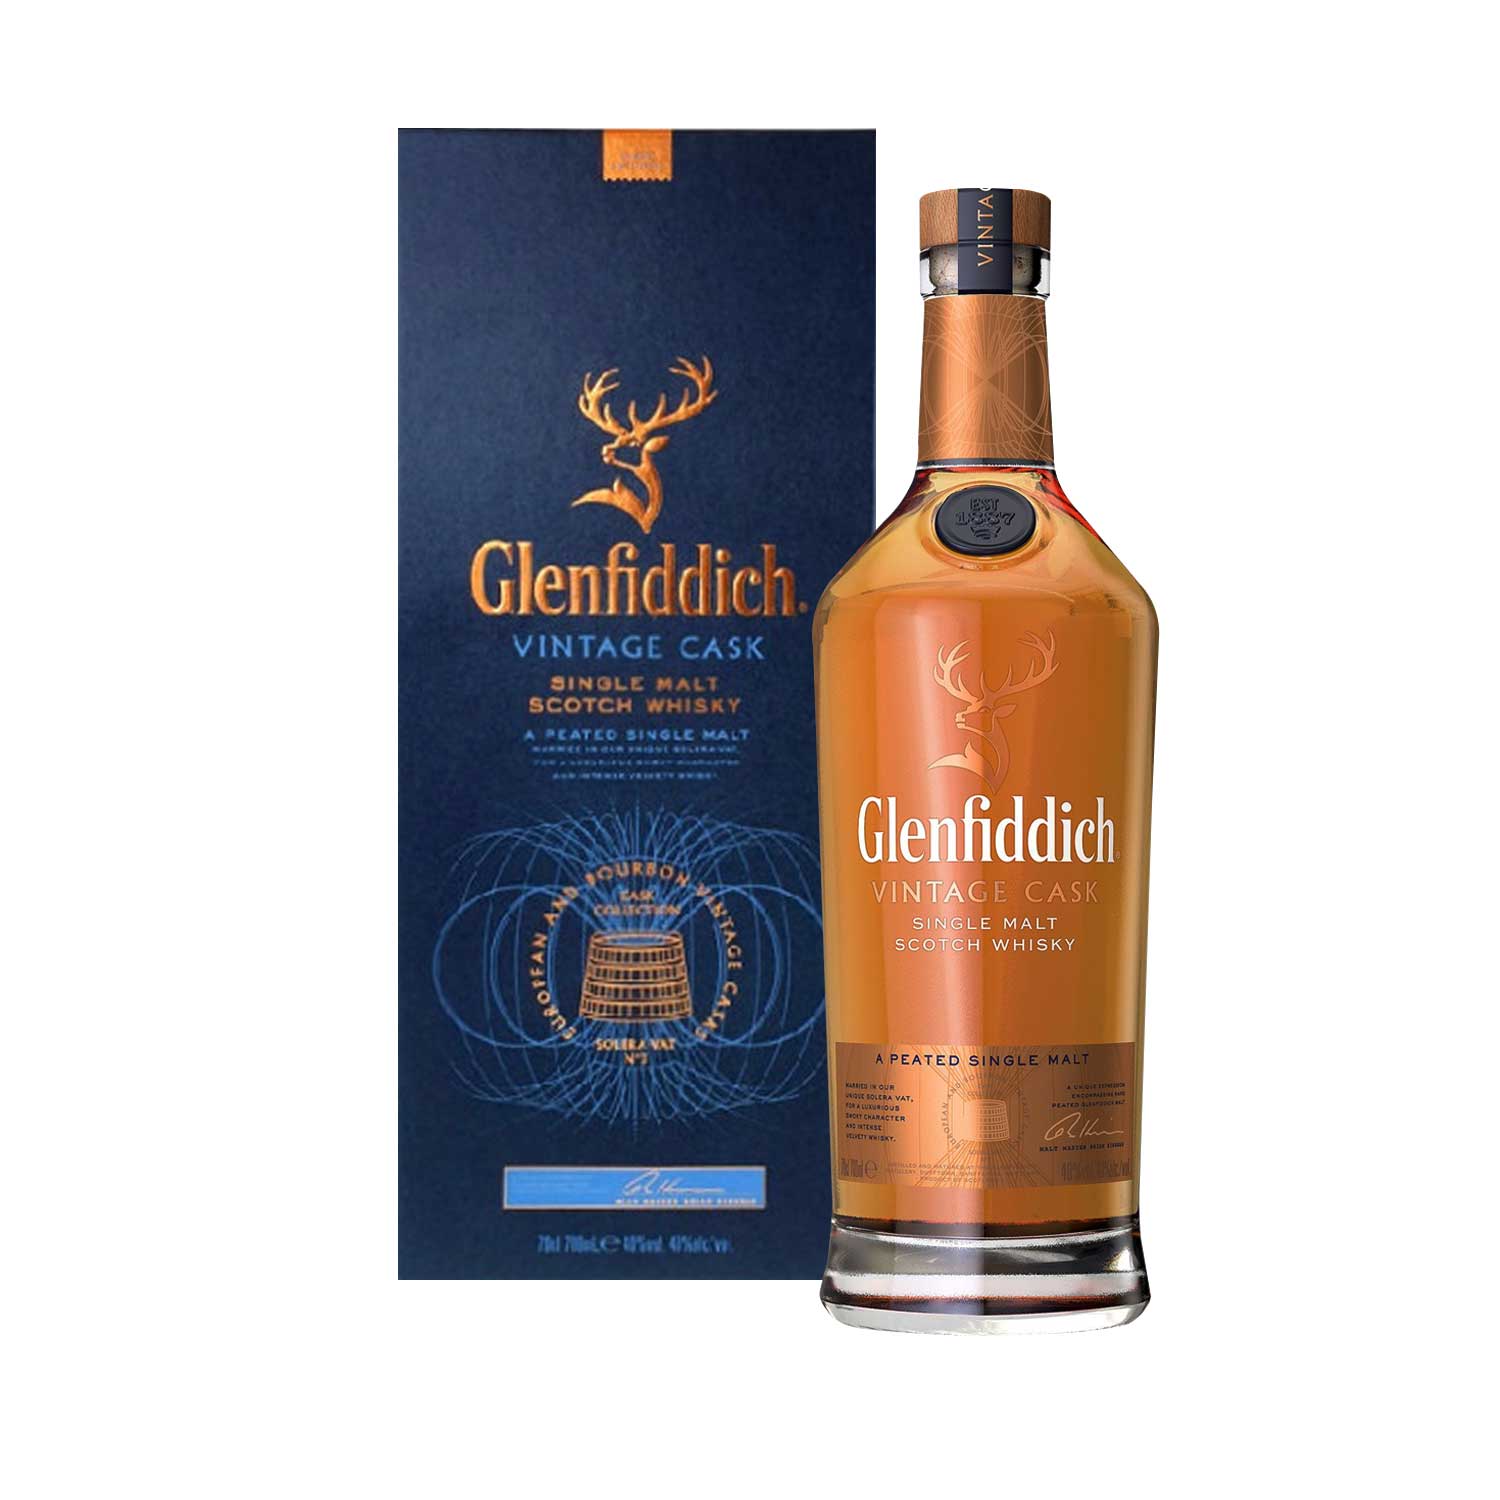 Glenfiddich vintage cask single malt whisky